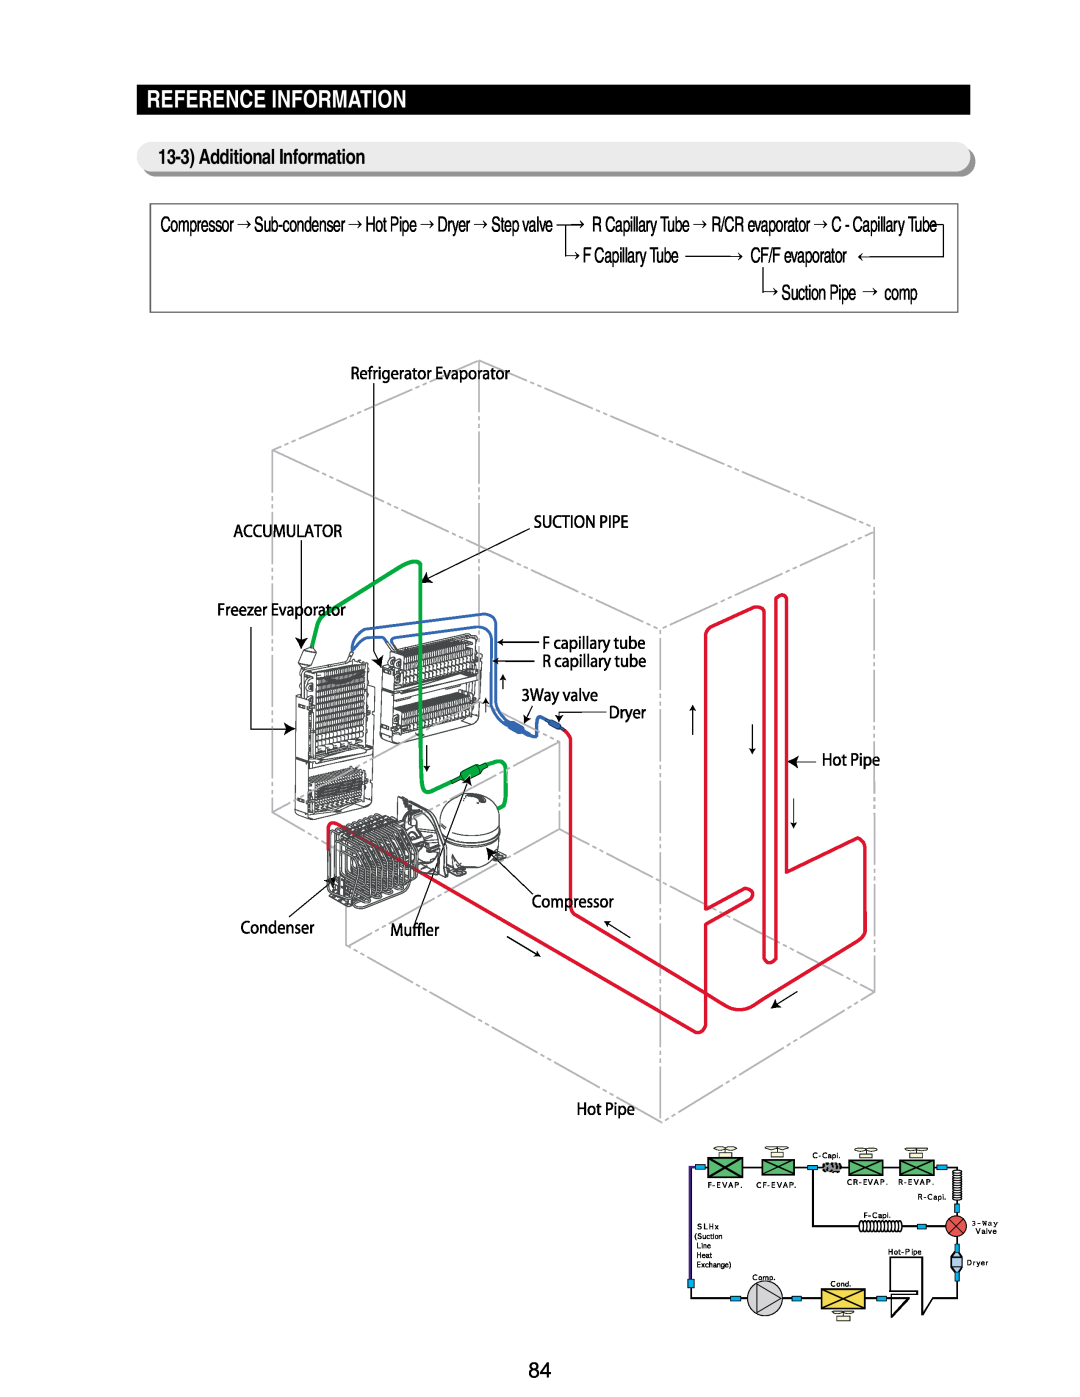 Samsung RM255BABB manual Additional Information, Reference Information, R/CR evaporator C - Capillary Tube, comp, 3-Way 